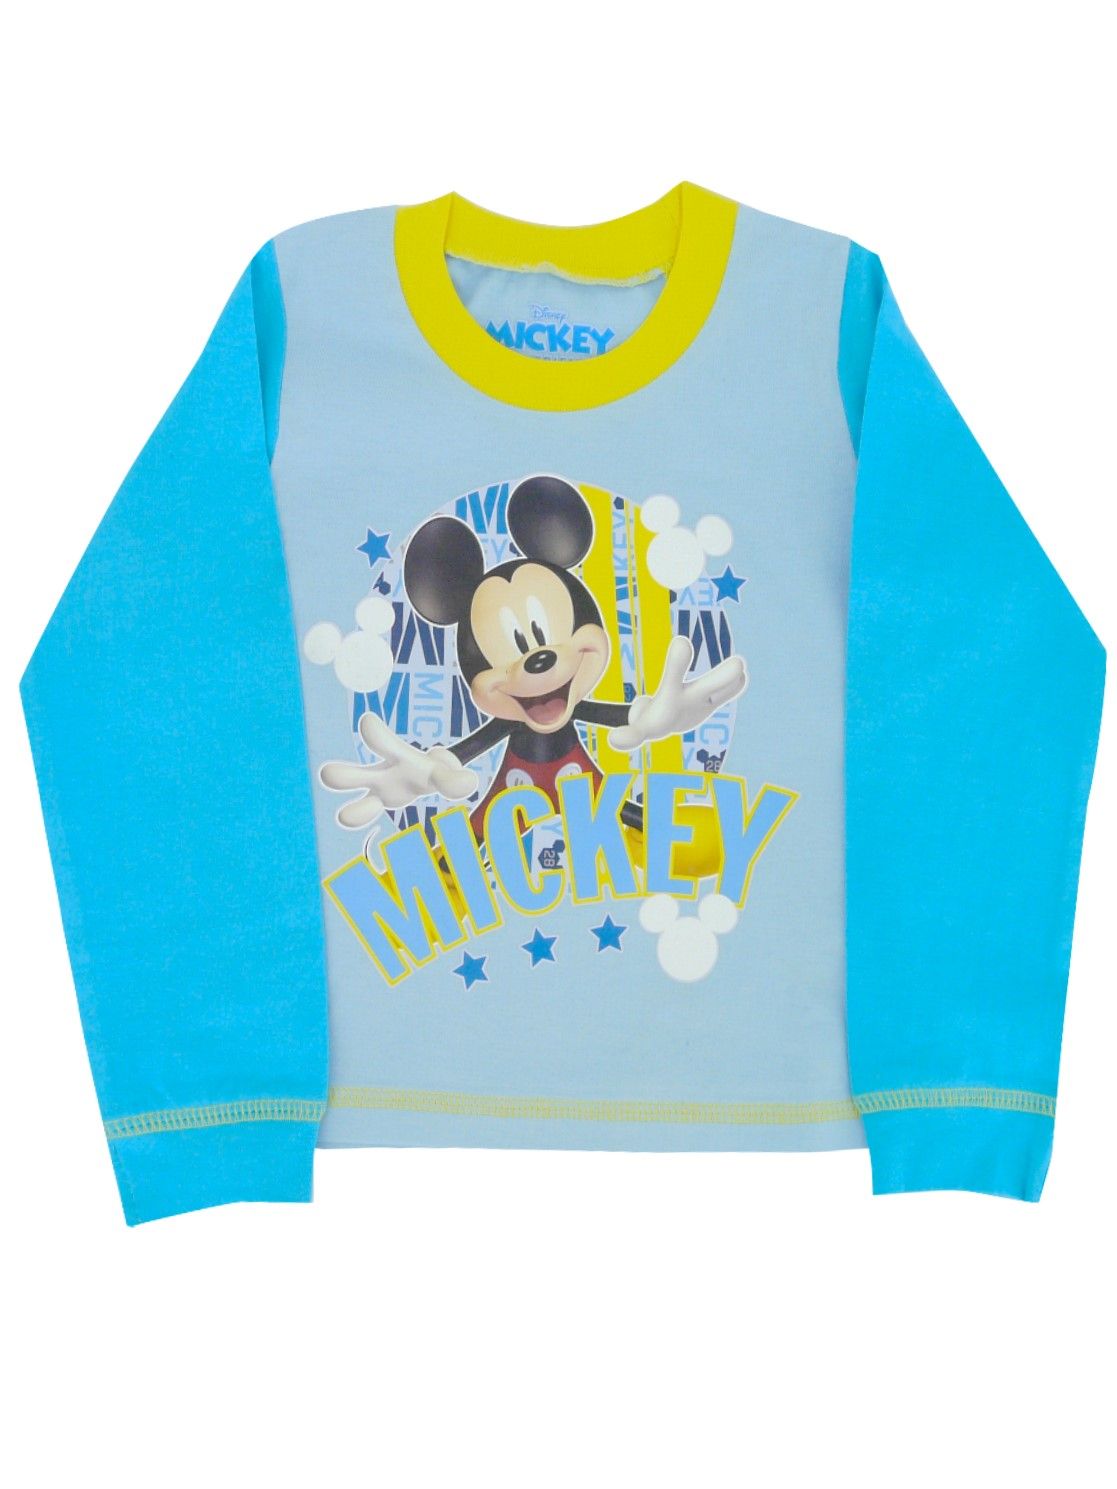 Disney Mickey Mouse "Hands" Boys Pyjamas